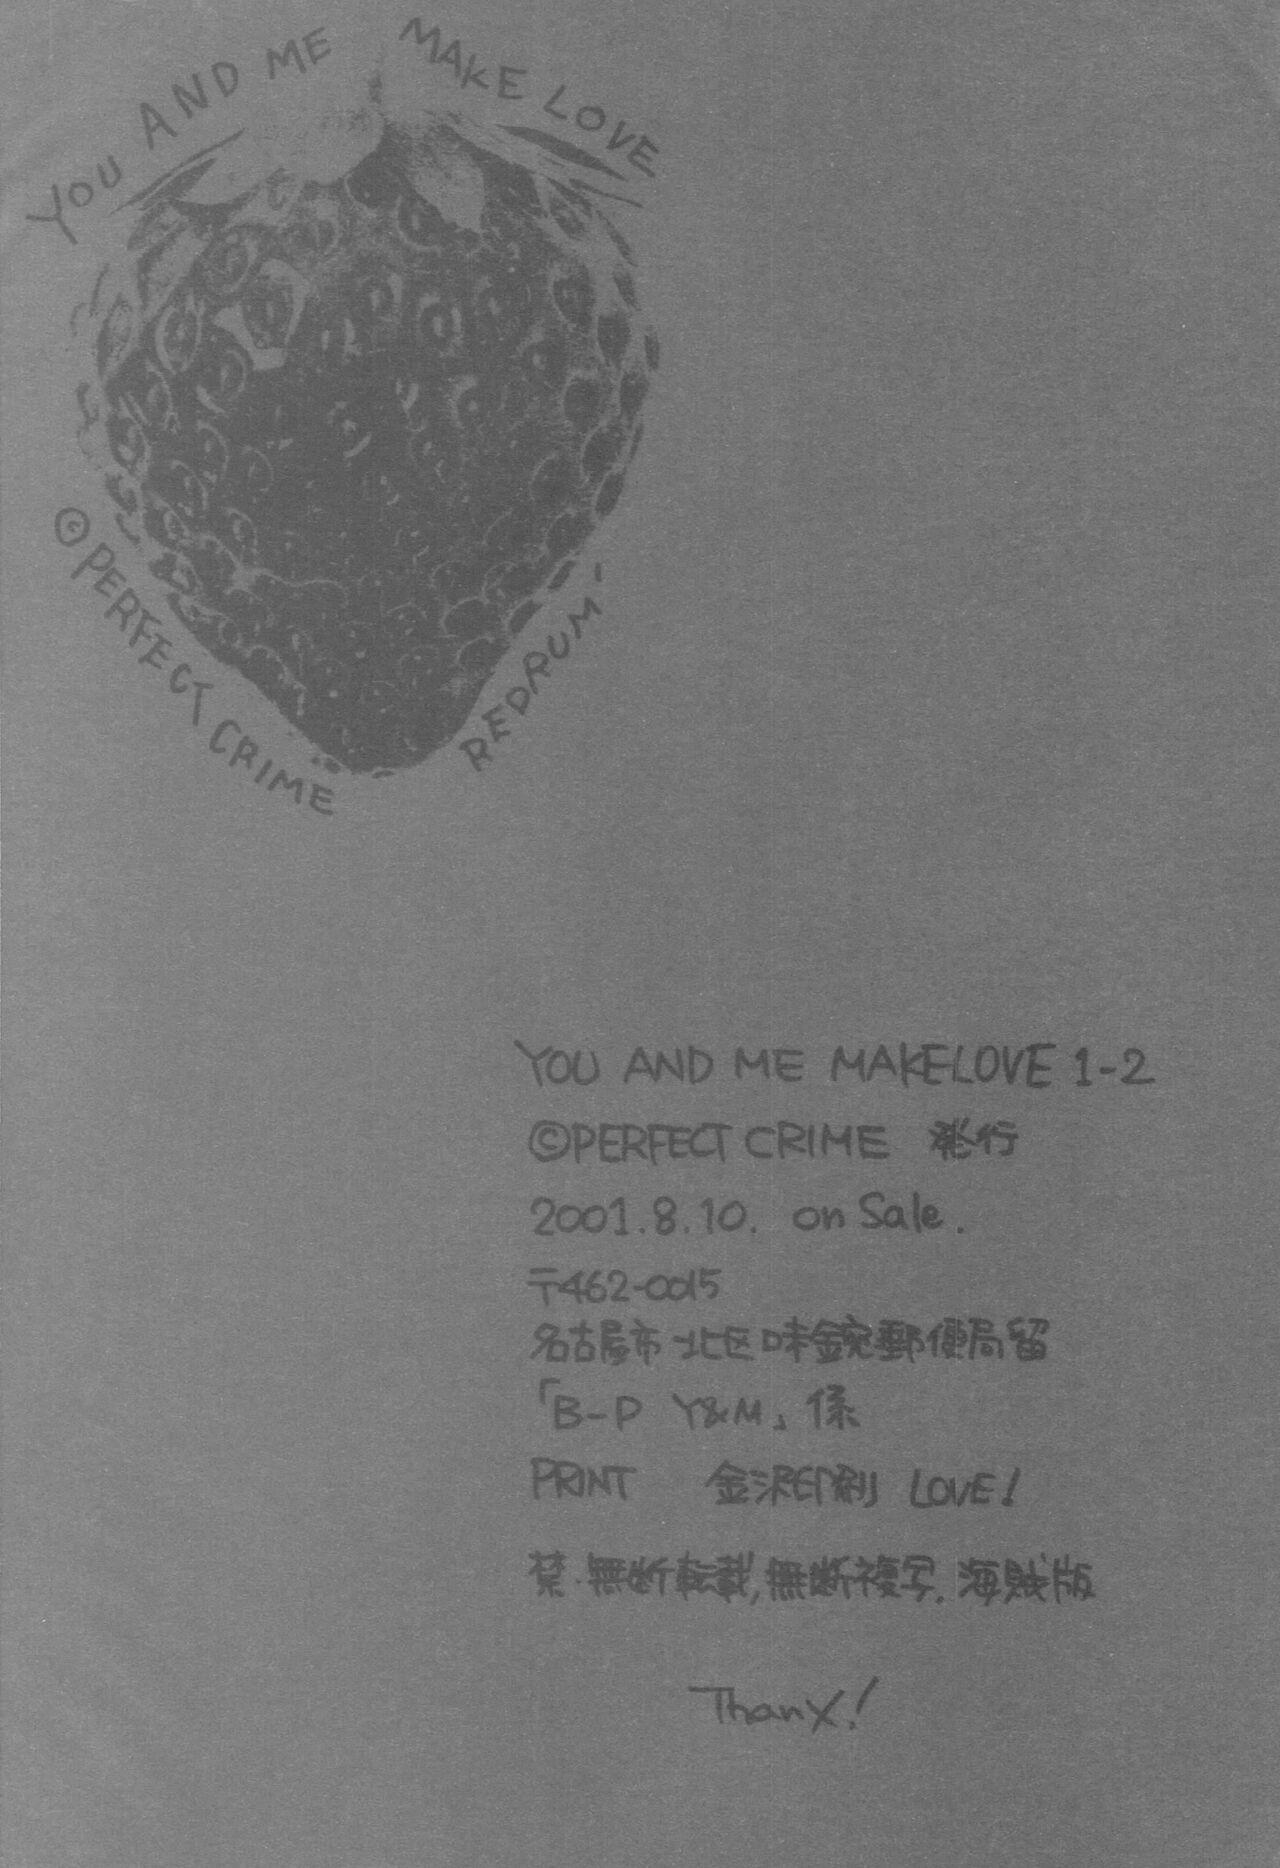 YOU AND ME MAKE LOVE 1-2 127